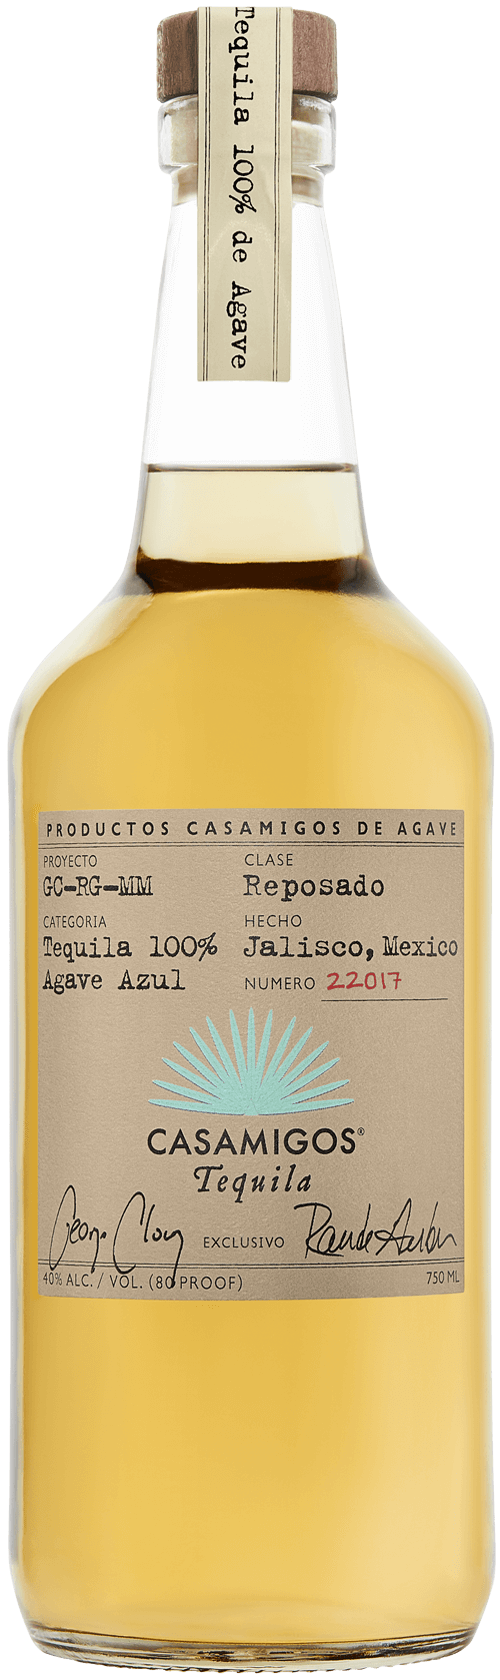 CASAMIGOS REPOSADO - Bk Wine Depot Corp